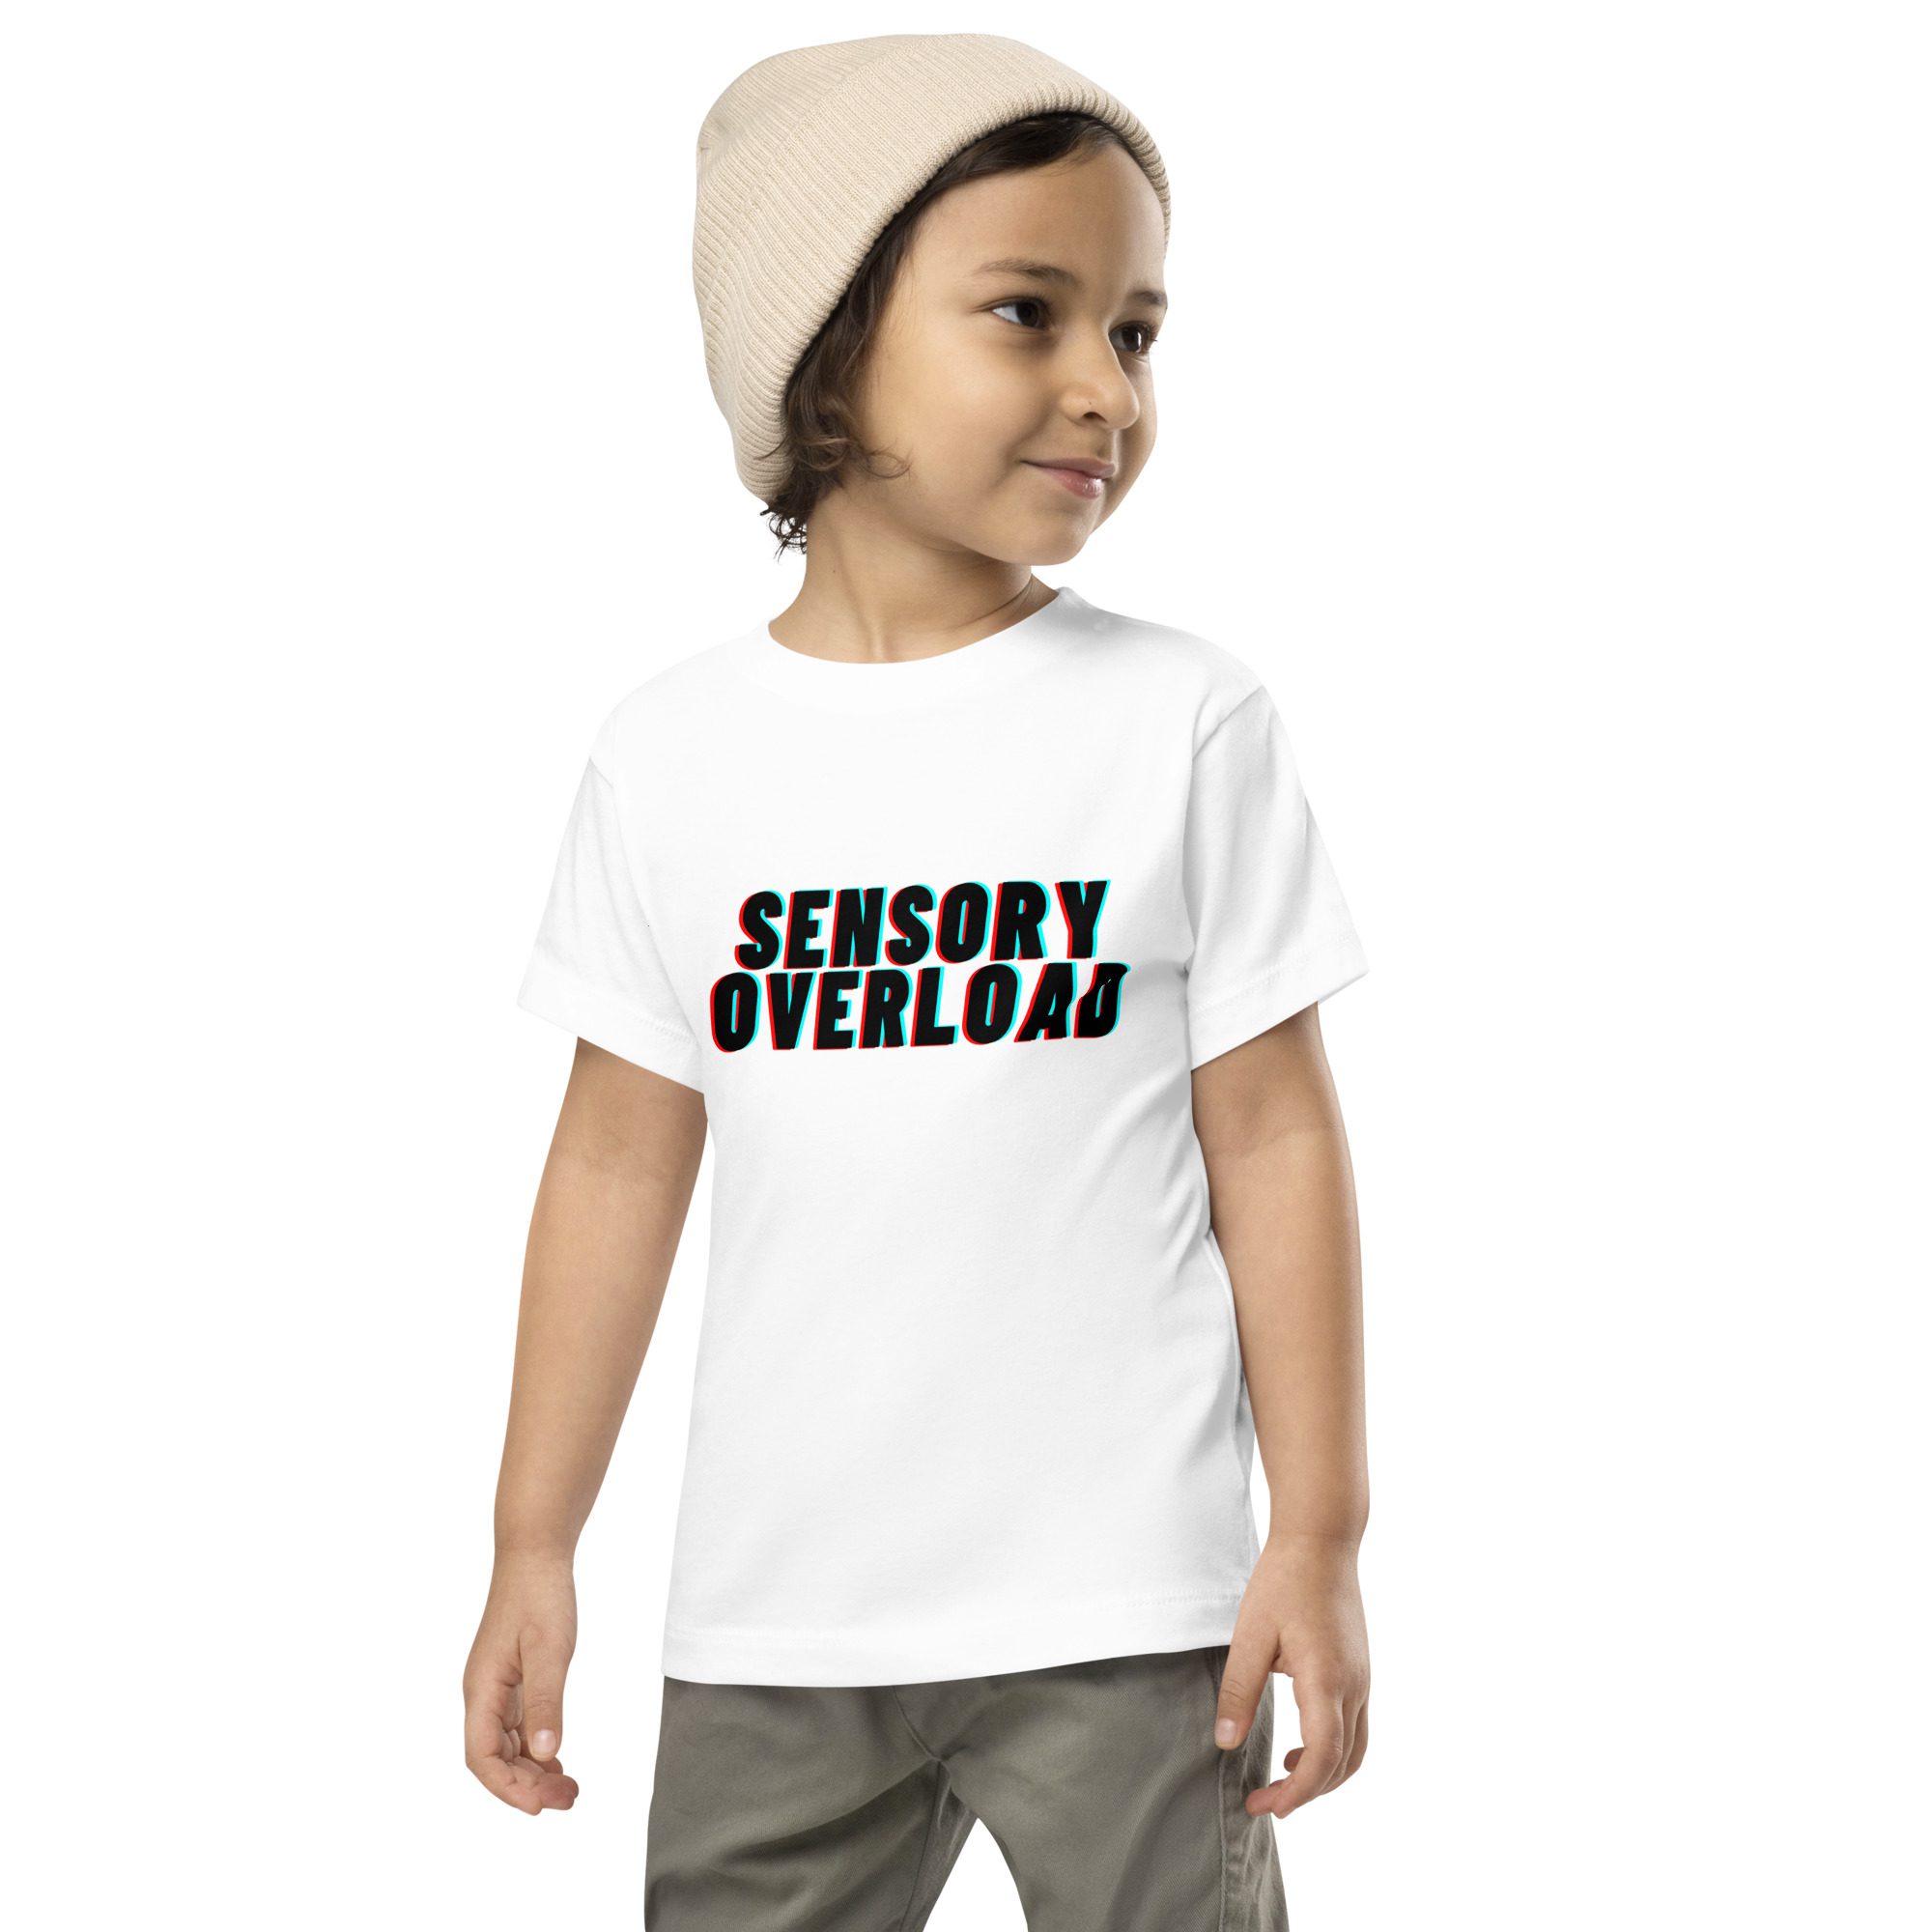 SENSORY OVERLOAD Toddler T-shirt